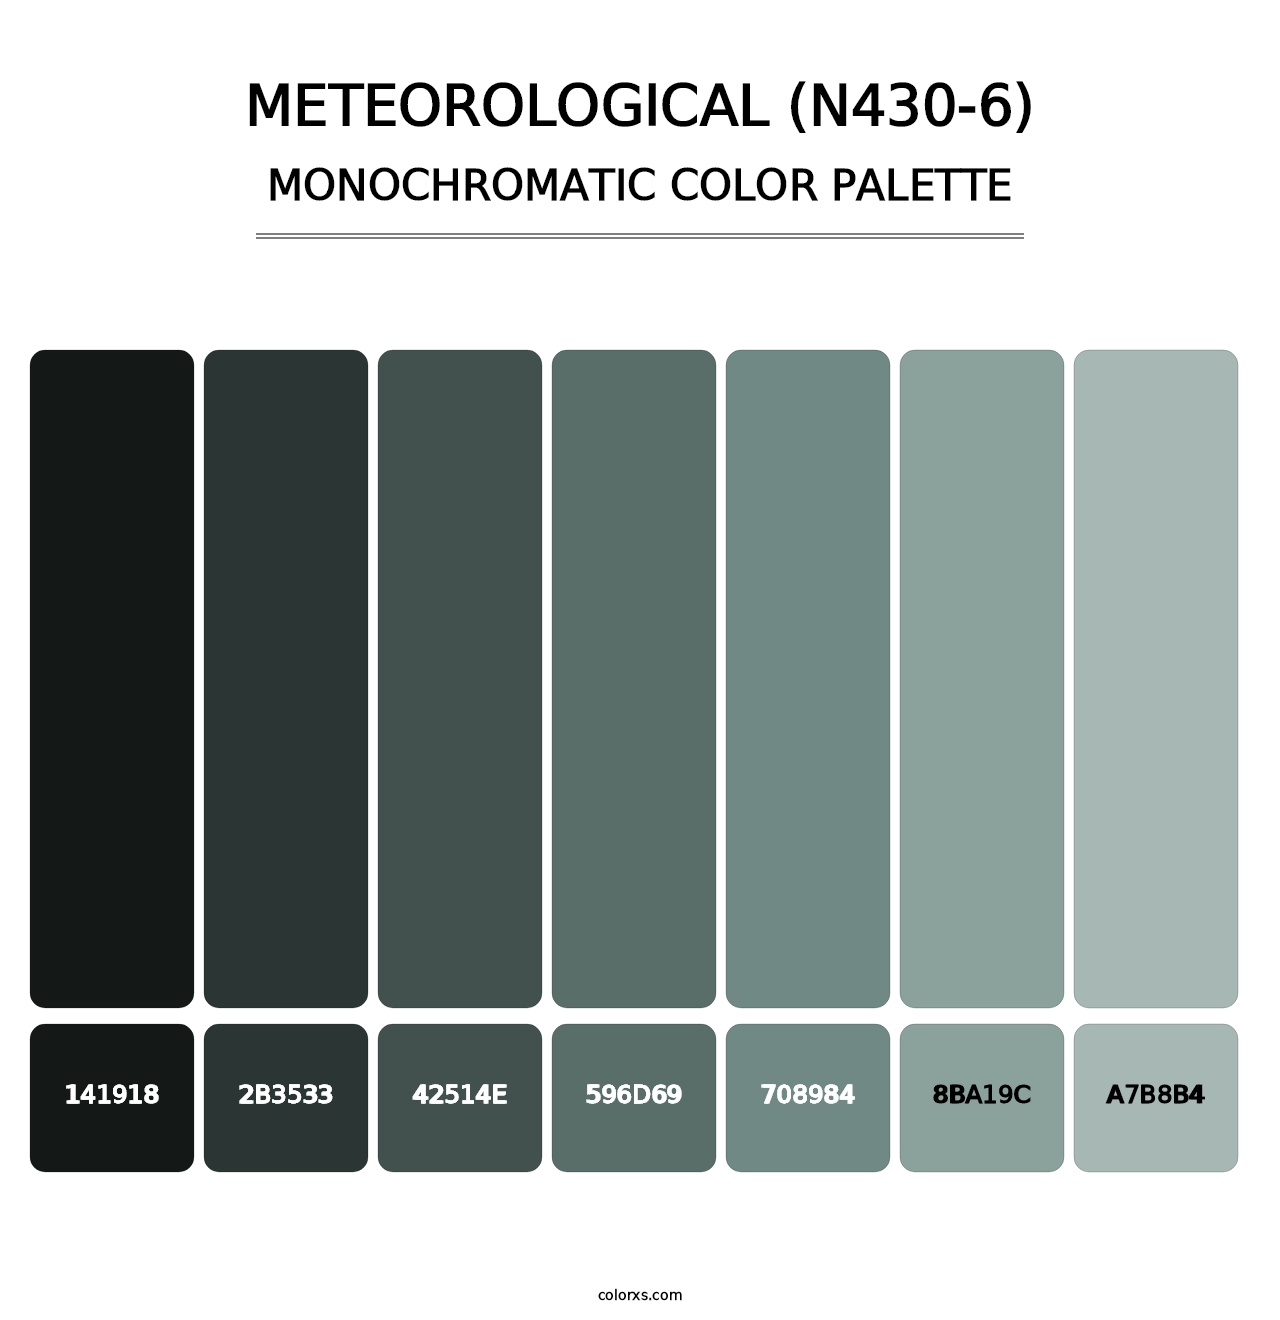 Meteorological (N430-6) - Monochromatic Color Palette